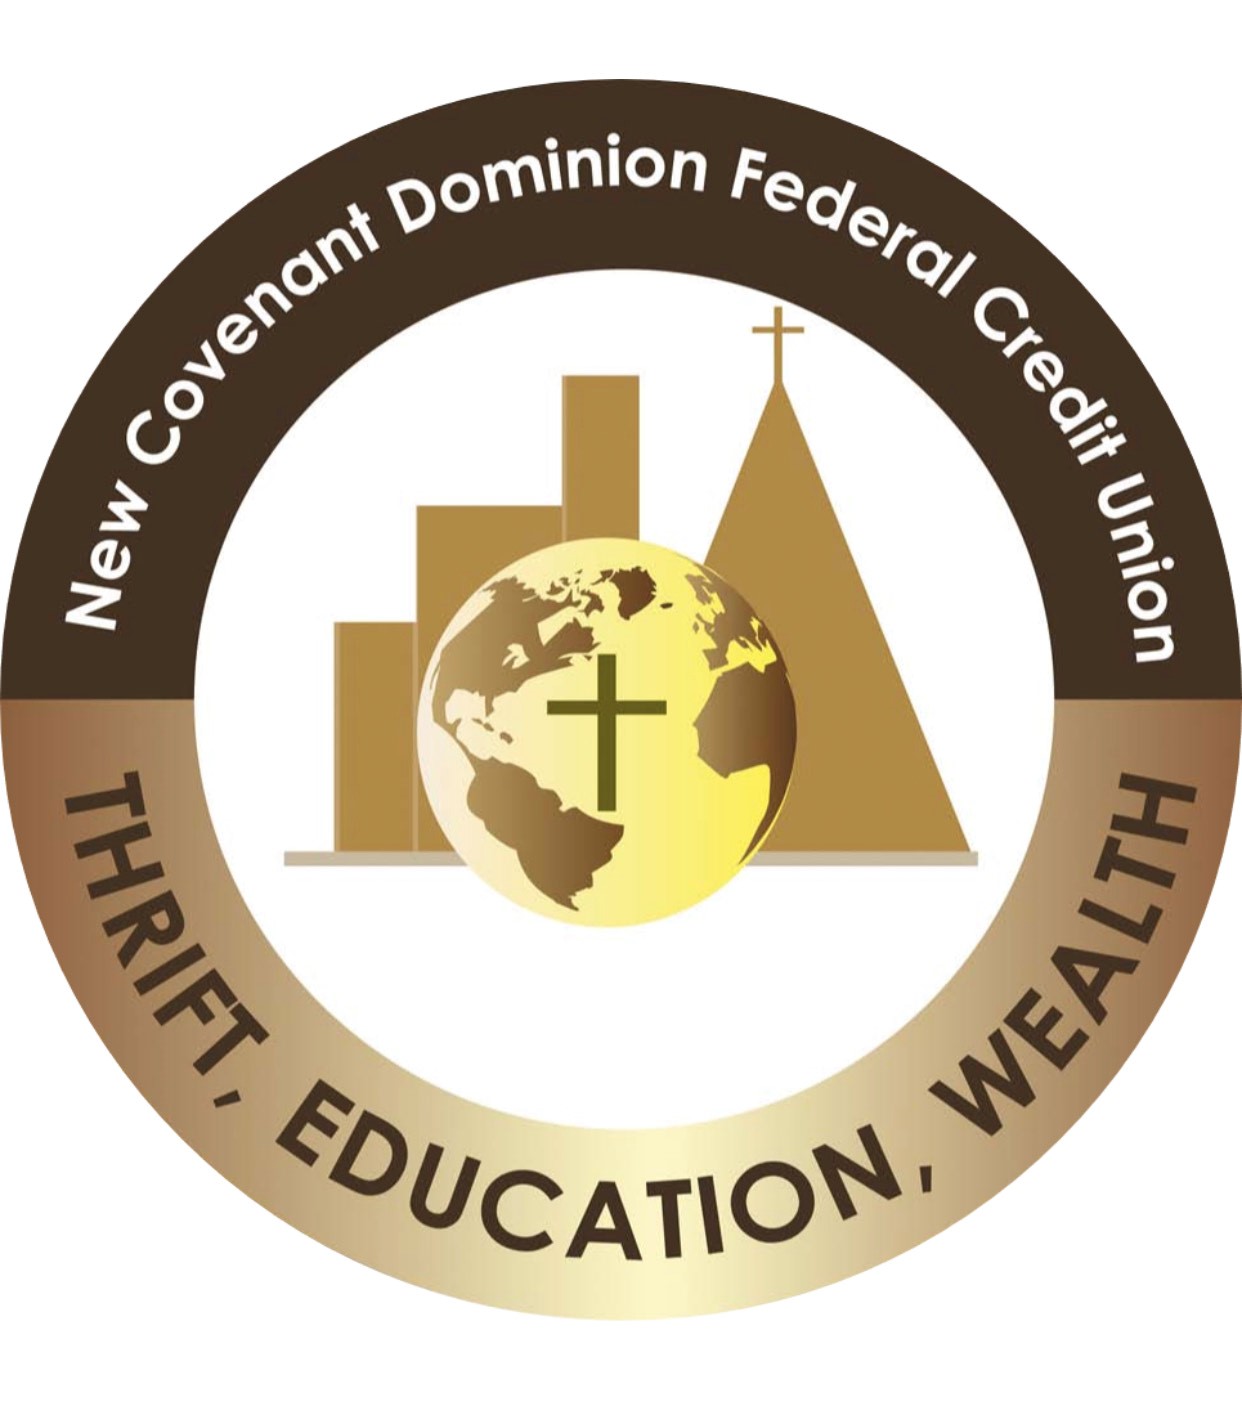 New Covenant Dominion Federal Credit Union